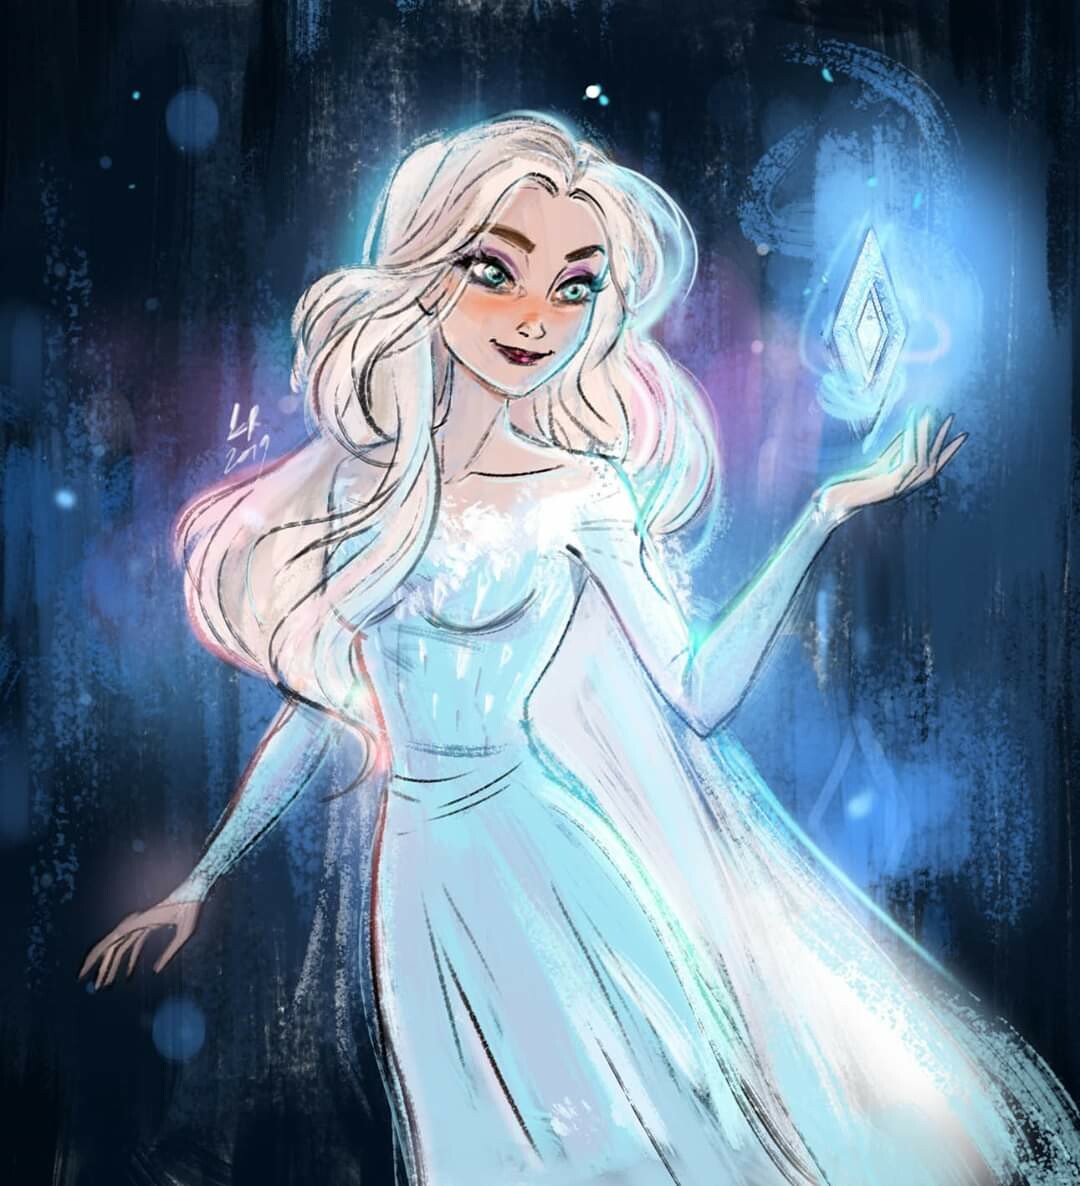 Hannah Alexander Artwork on Twitter Elsa Frozen2 I couldnt resist  drawing her hair down shes such a boss httpstcoujoGjyEsA7  Twitter